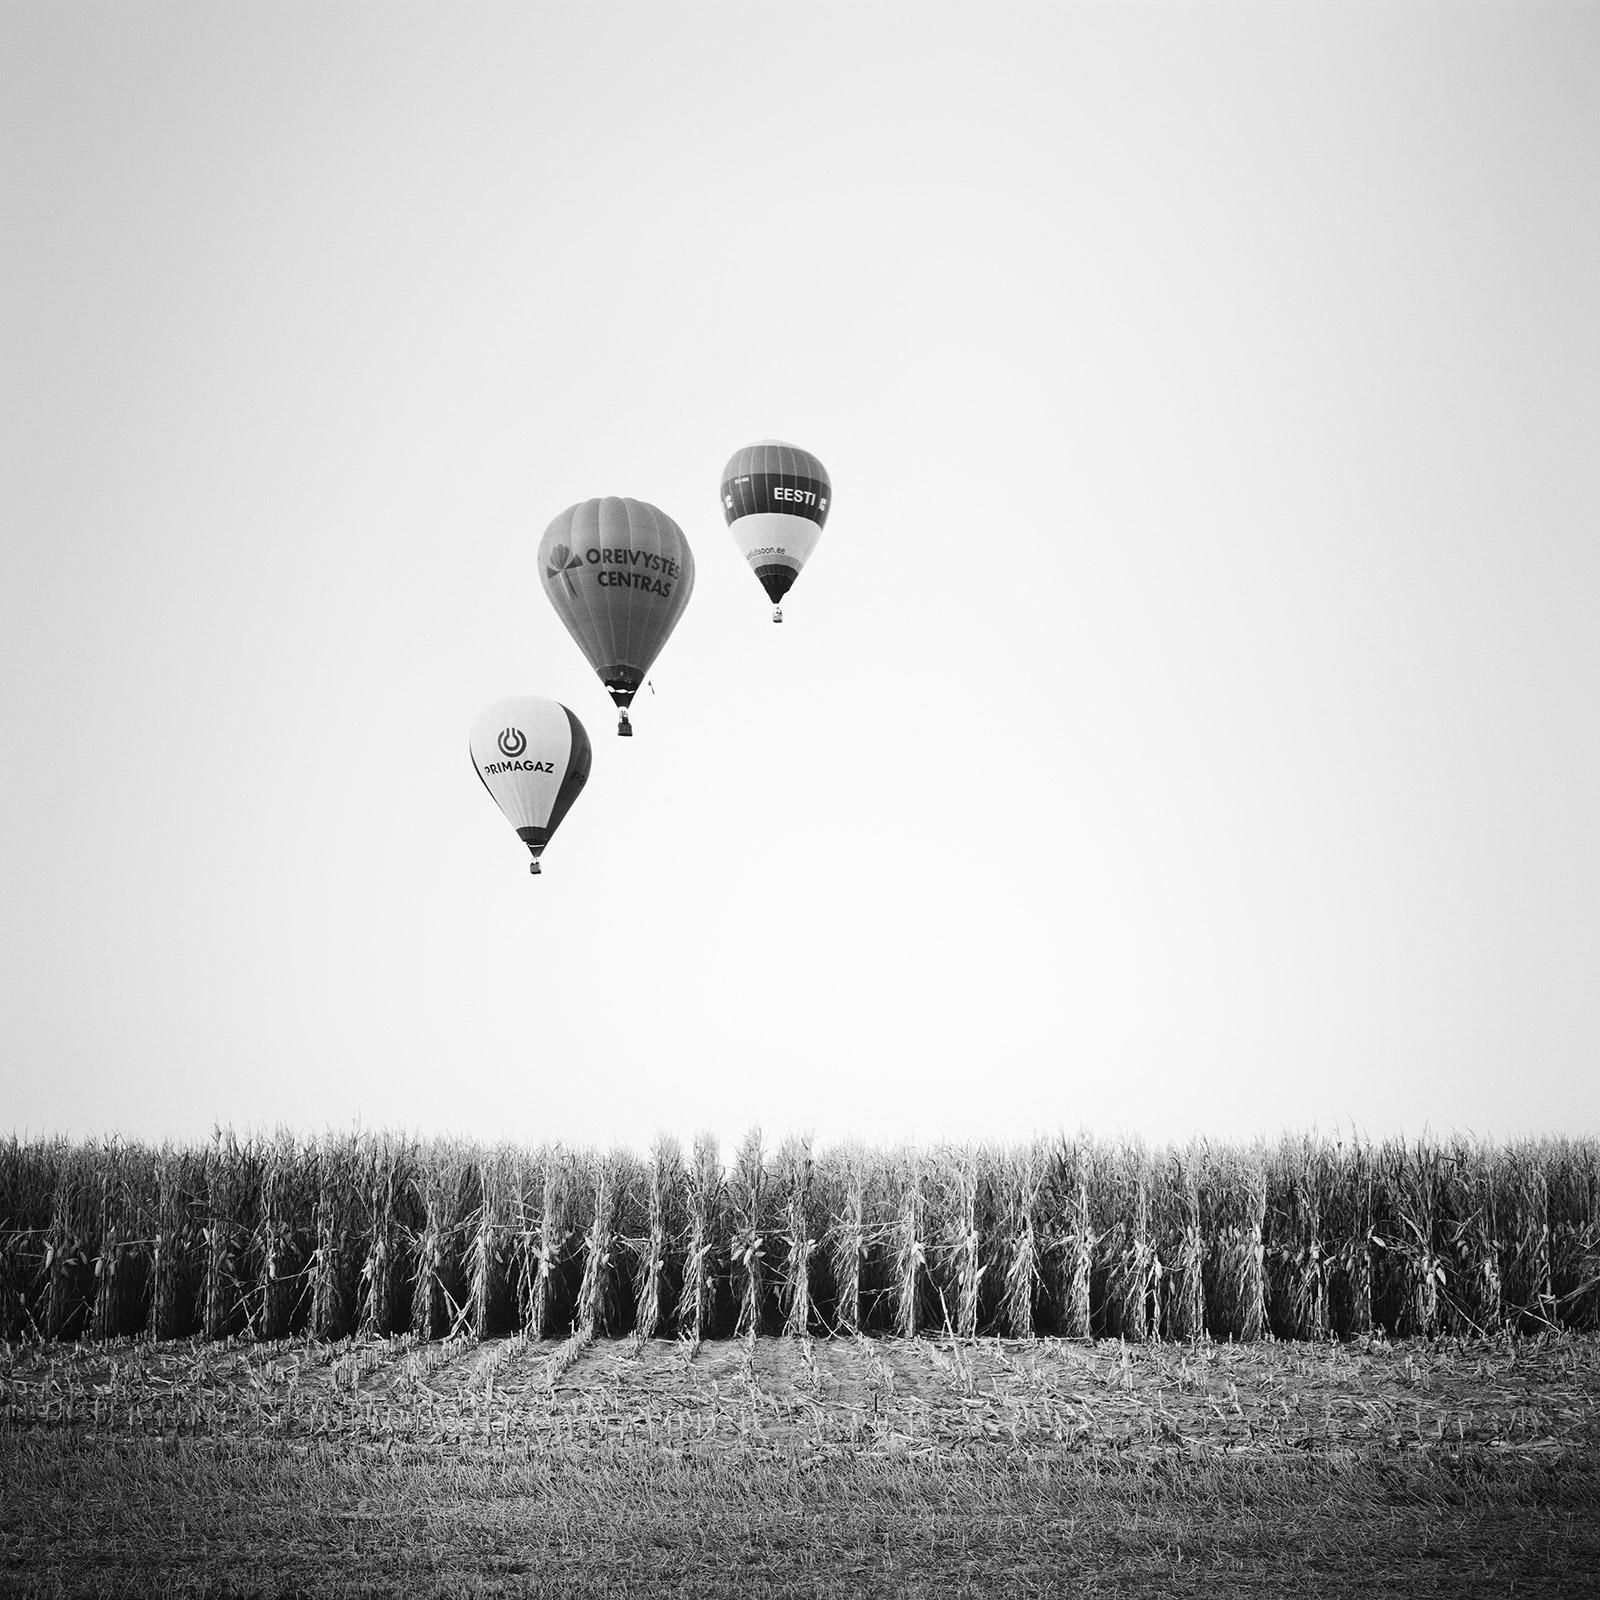 Gerald Berghammer Black and White Photograph - Hot Air Balloon, Cornfield, Championship, Austria, Black White landscape Photo